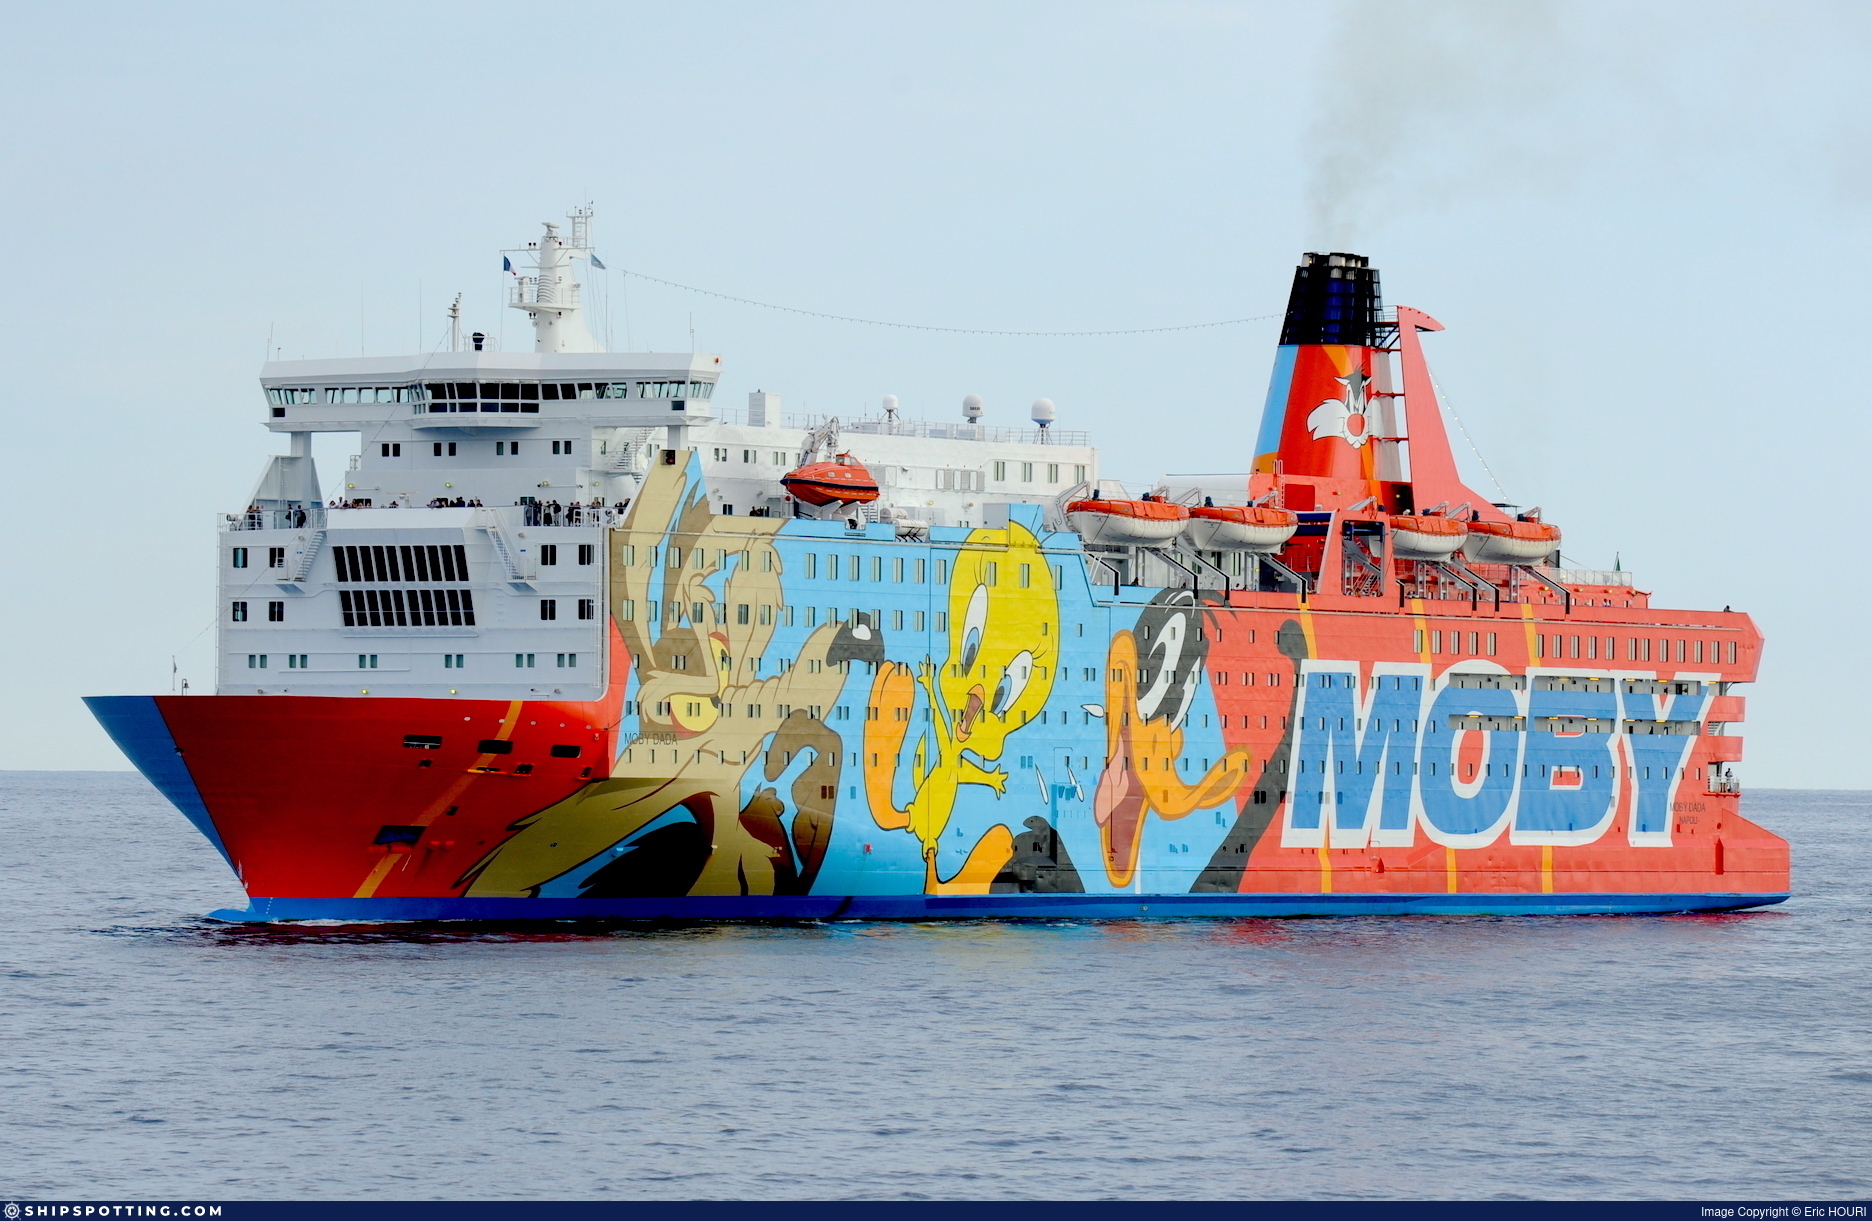 MOBY DADA - IMO 7911533 - ShipSpotting.com - Ship Photos, Information,  Videos and Ship Tracker